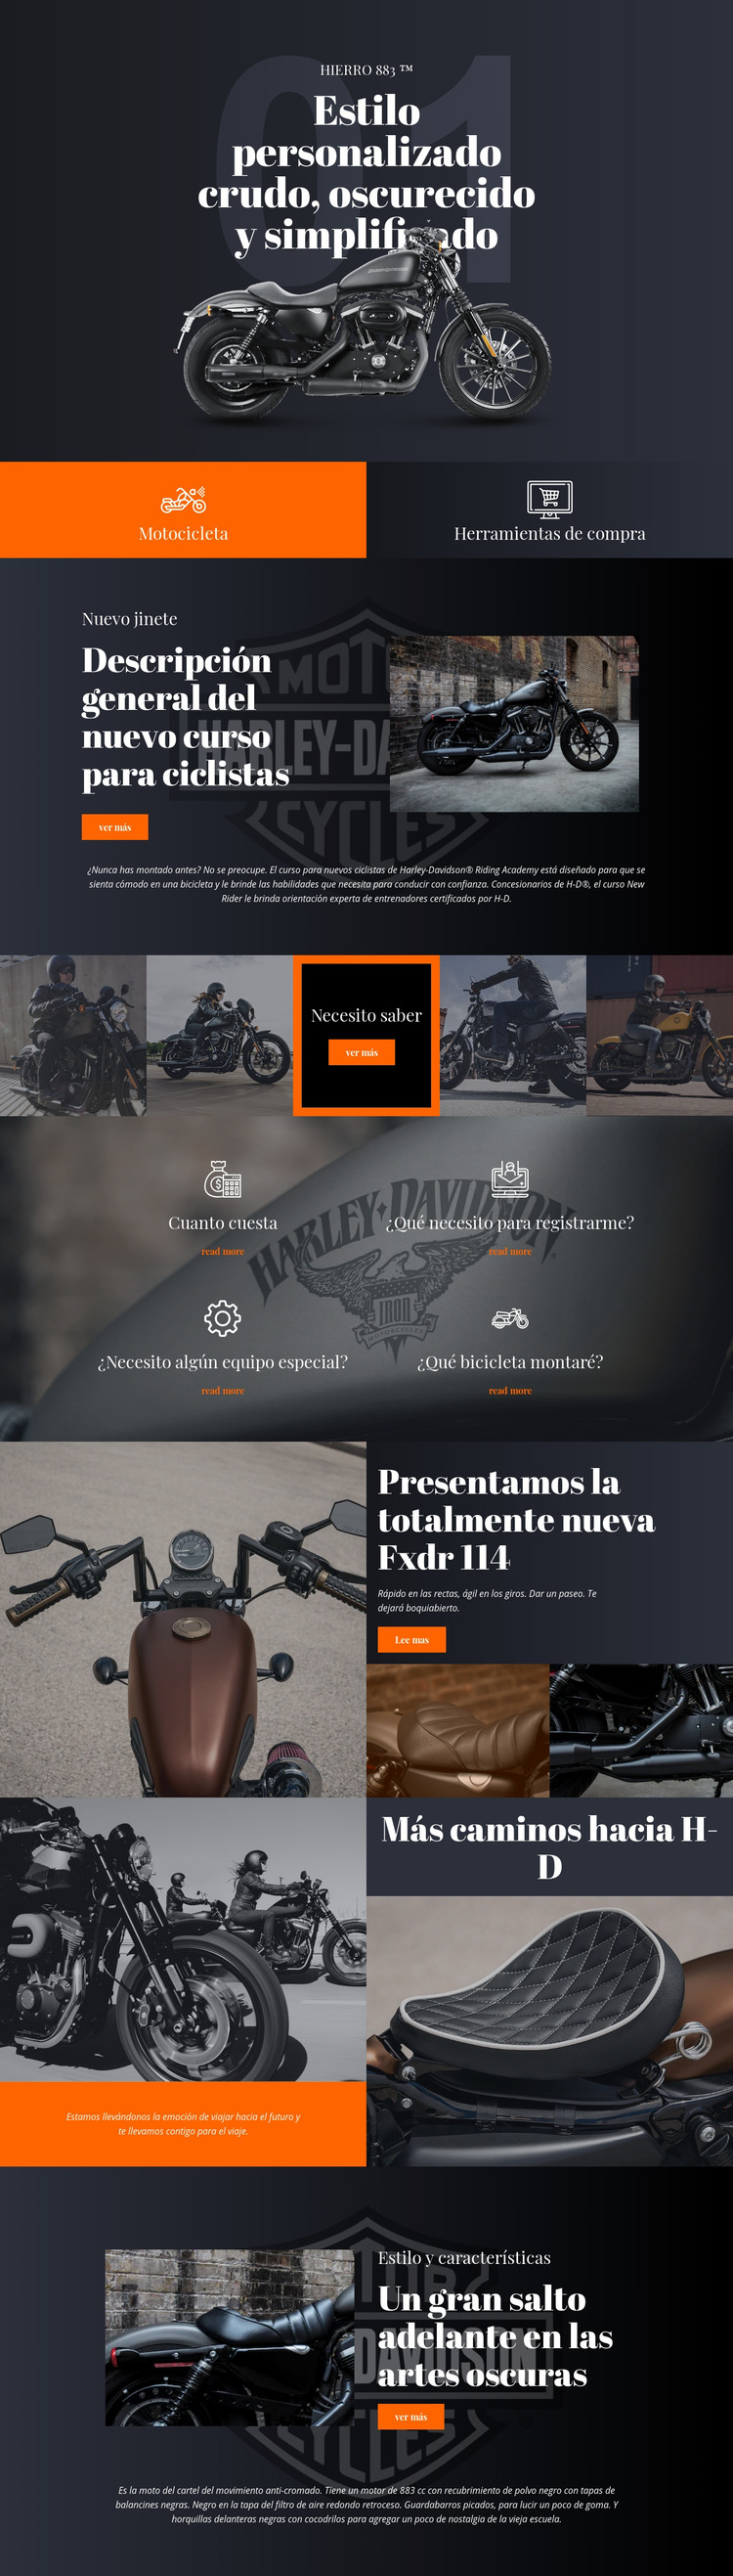 Harley Davidson Plantilla Joomla